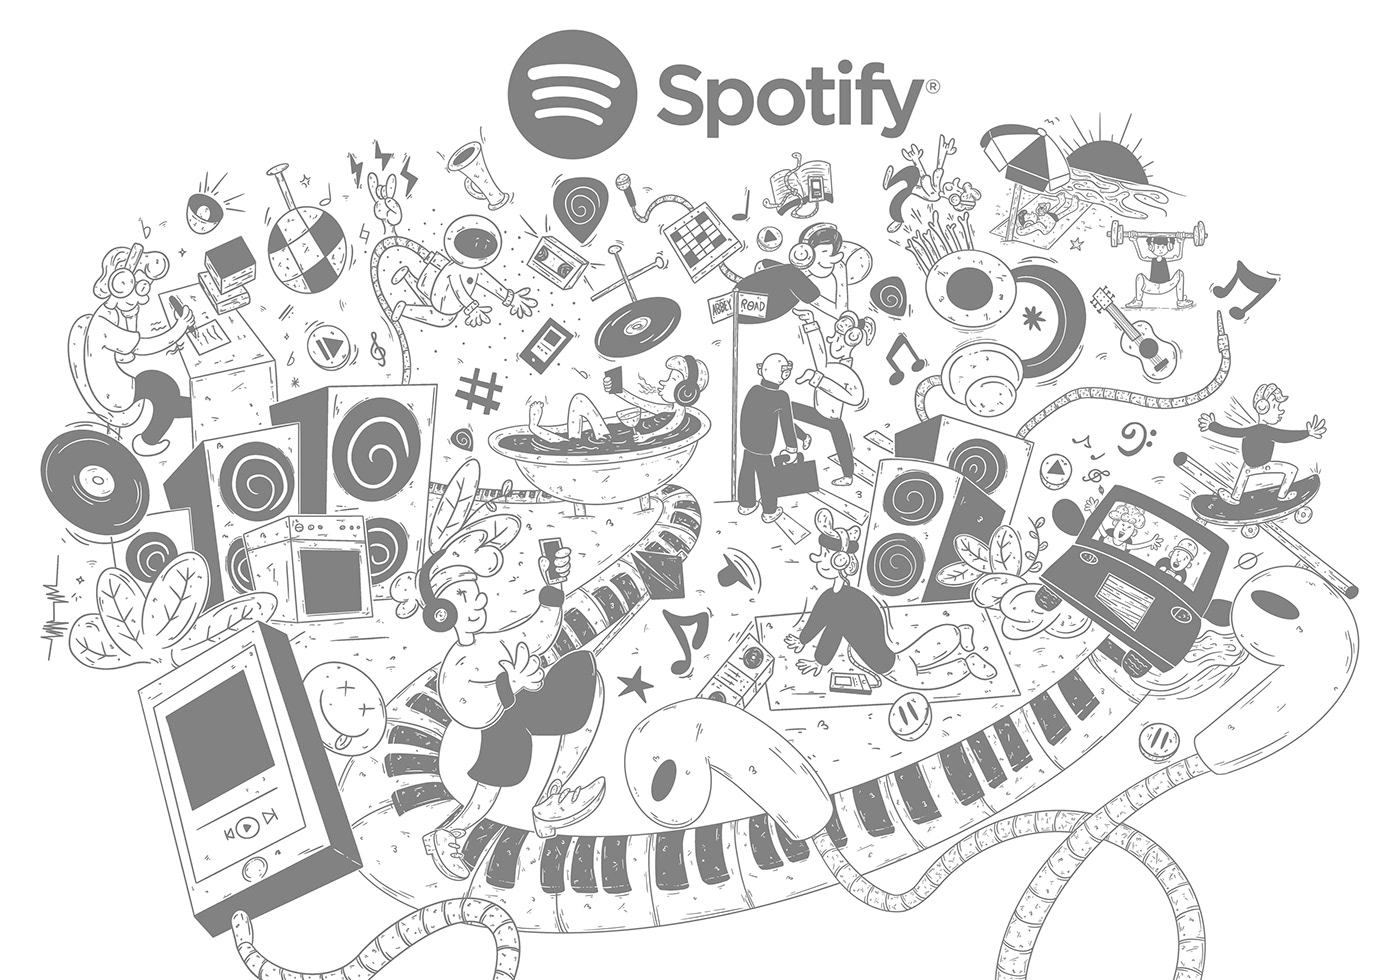 music spotify cover doodle cartoon digital illustration embalagem Packaging publicidade